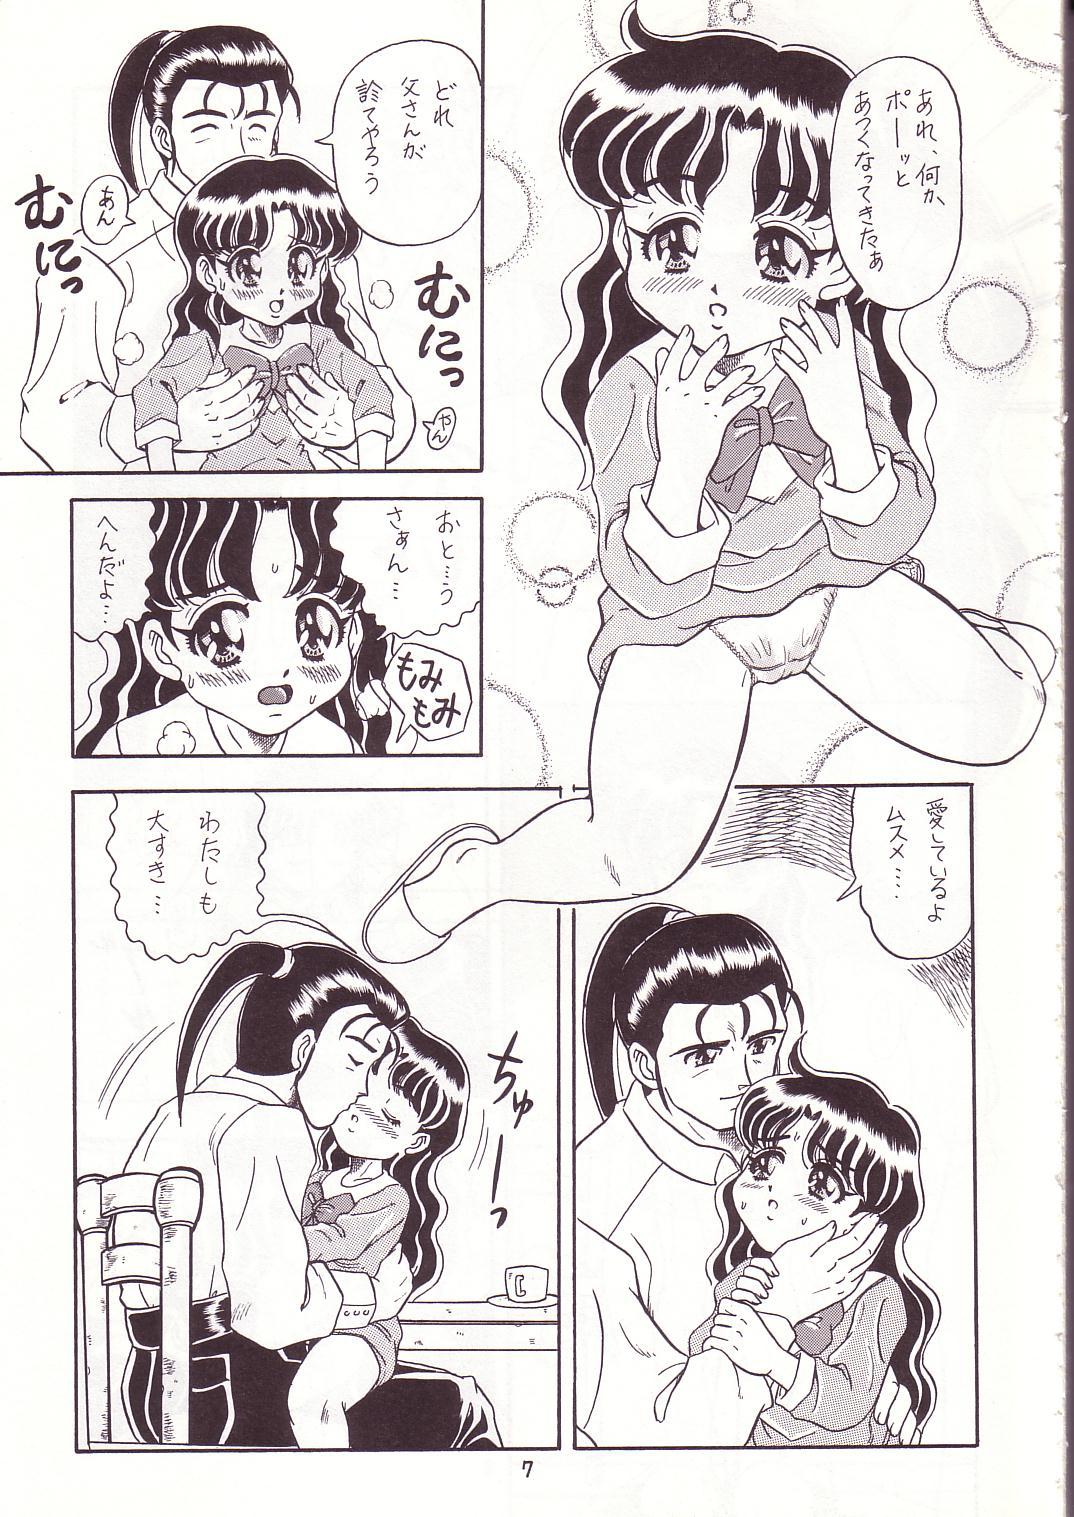 Hotwife Lolikko LOVE 7 - Sakura taisen Martian successor nadesico Gaogaigar Minky momo Nurse angel ririka sos Wingman Amature Sex Tapes - Page 6